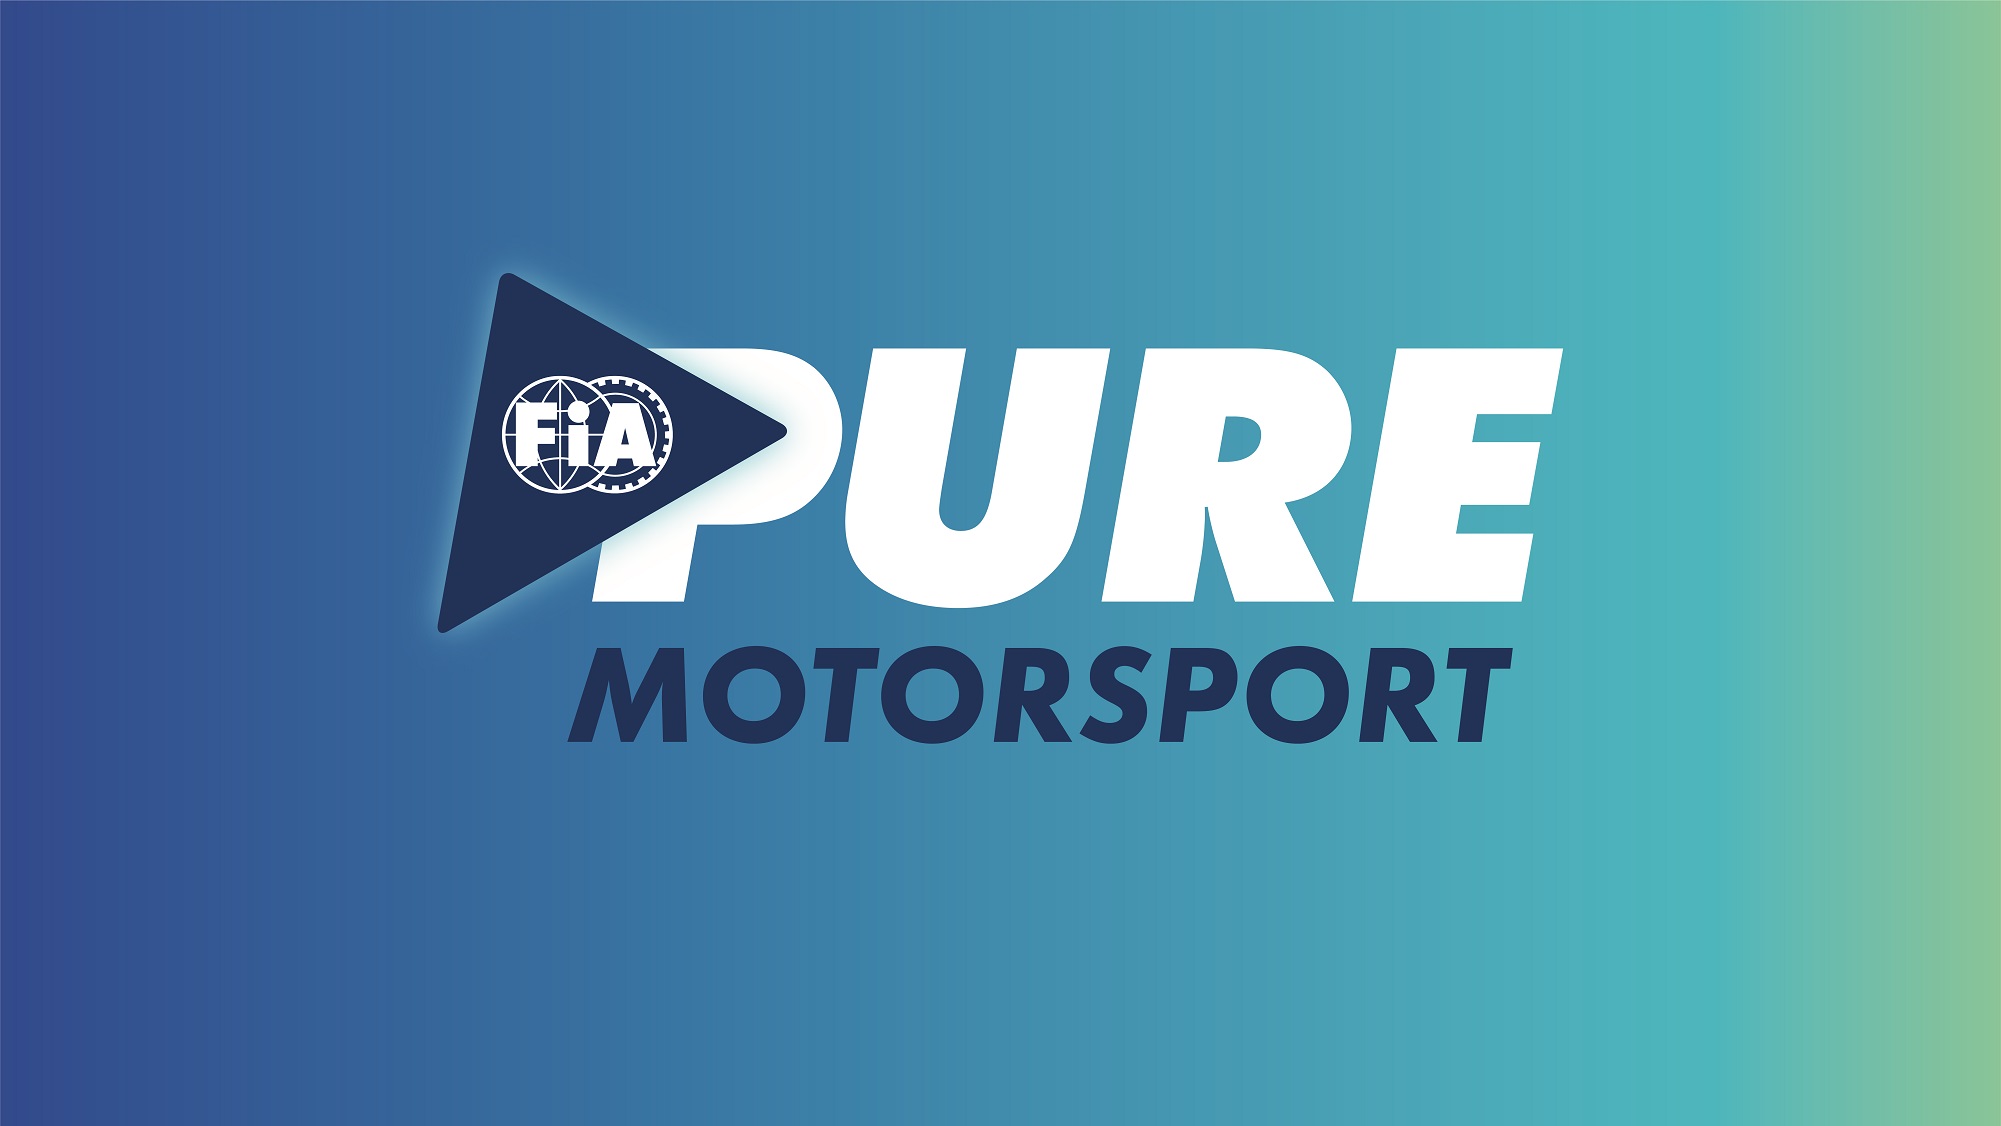 FIA - Pure Motorsport - 2021 Magazine - 26min highlight shows